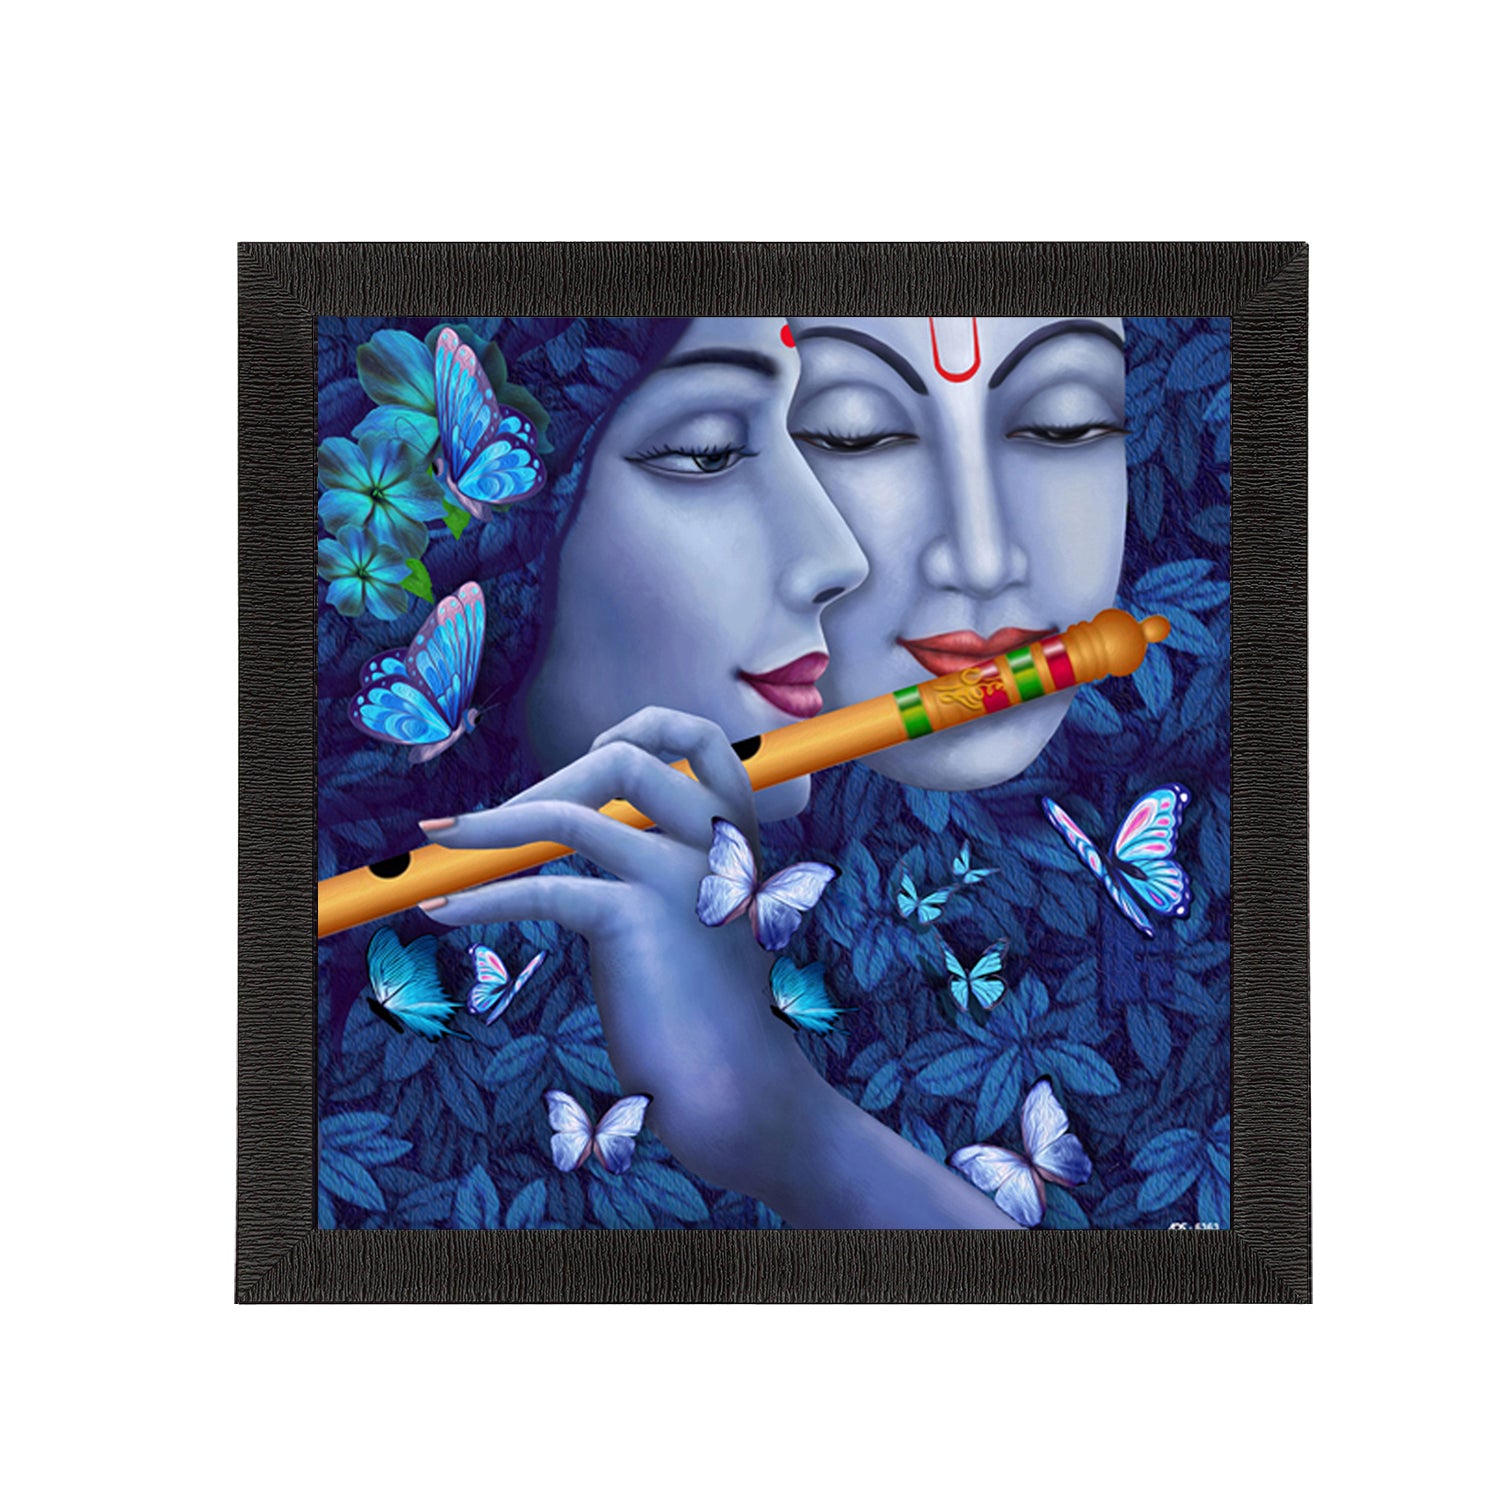 Radha Krishna Painting Digital Printed Religious Wall Art